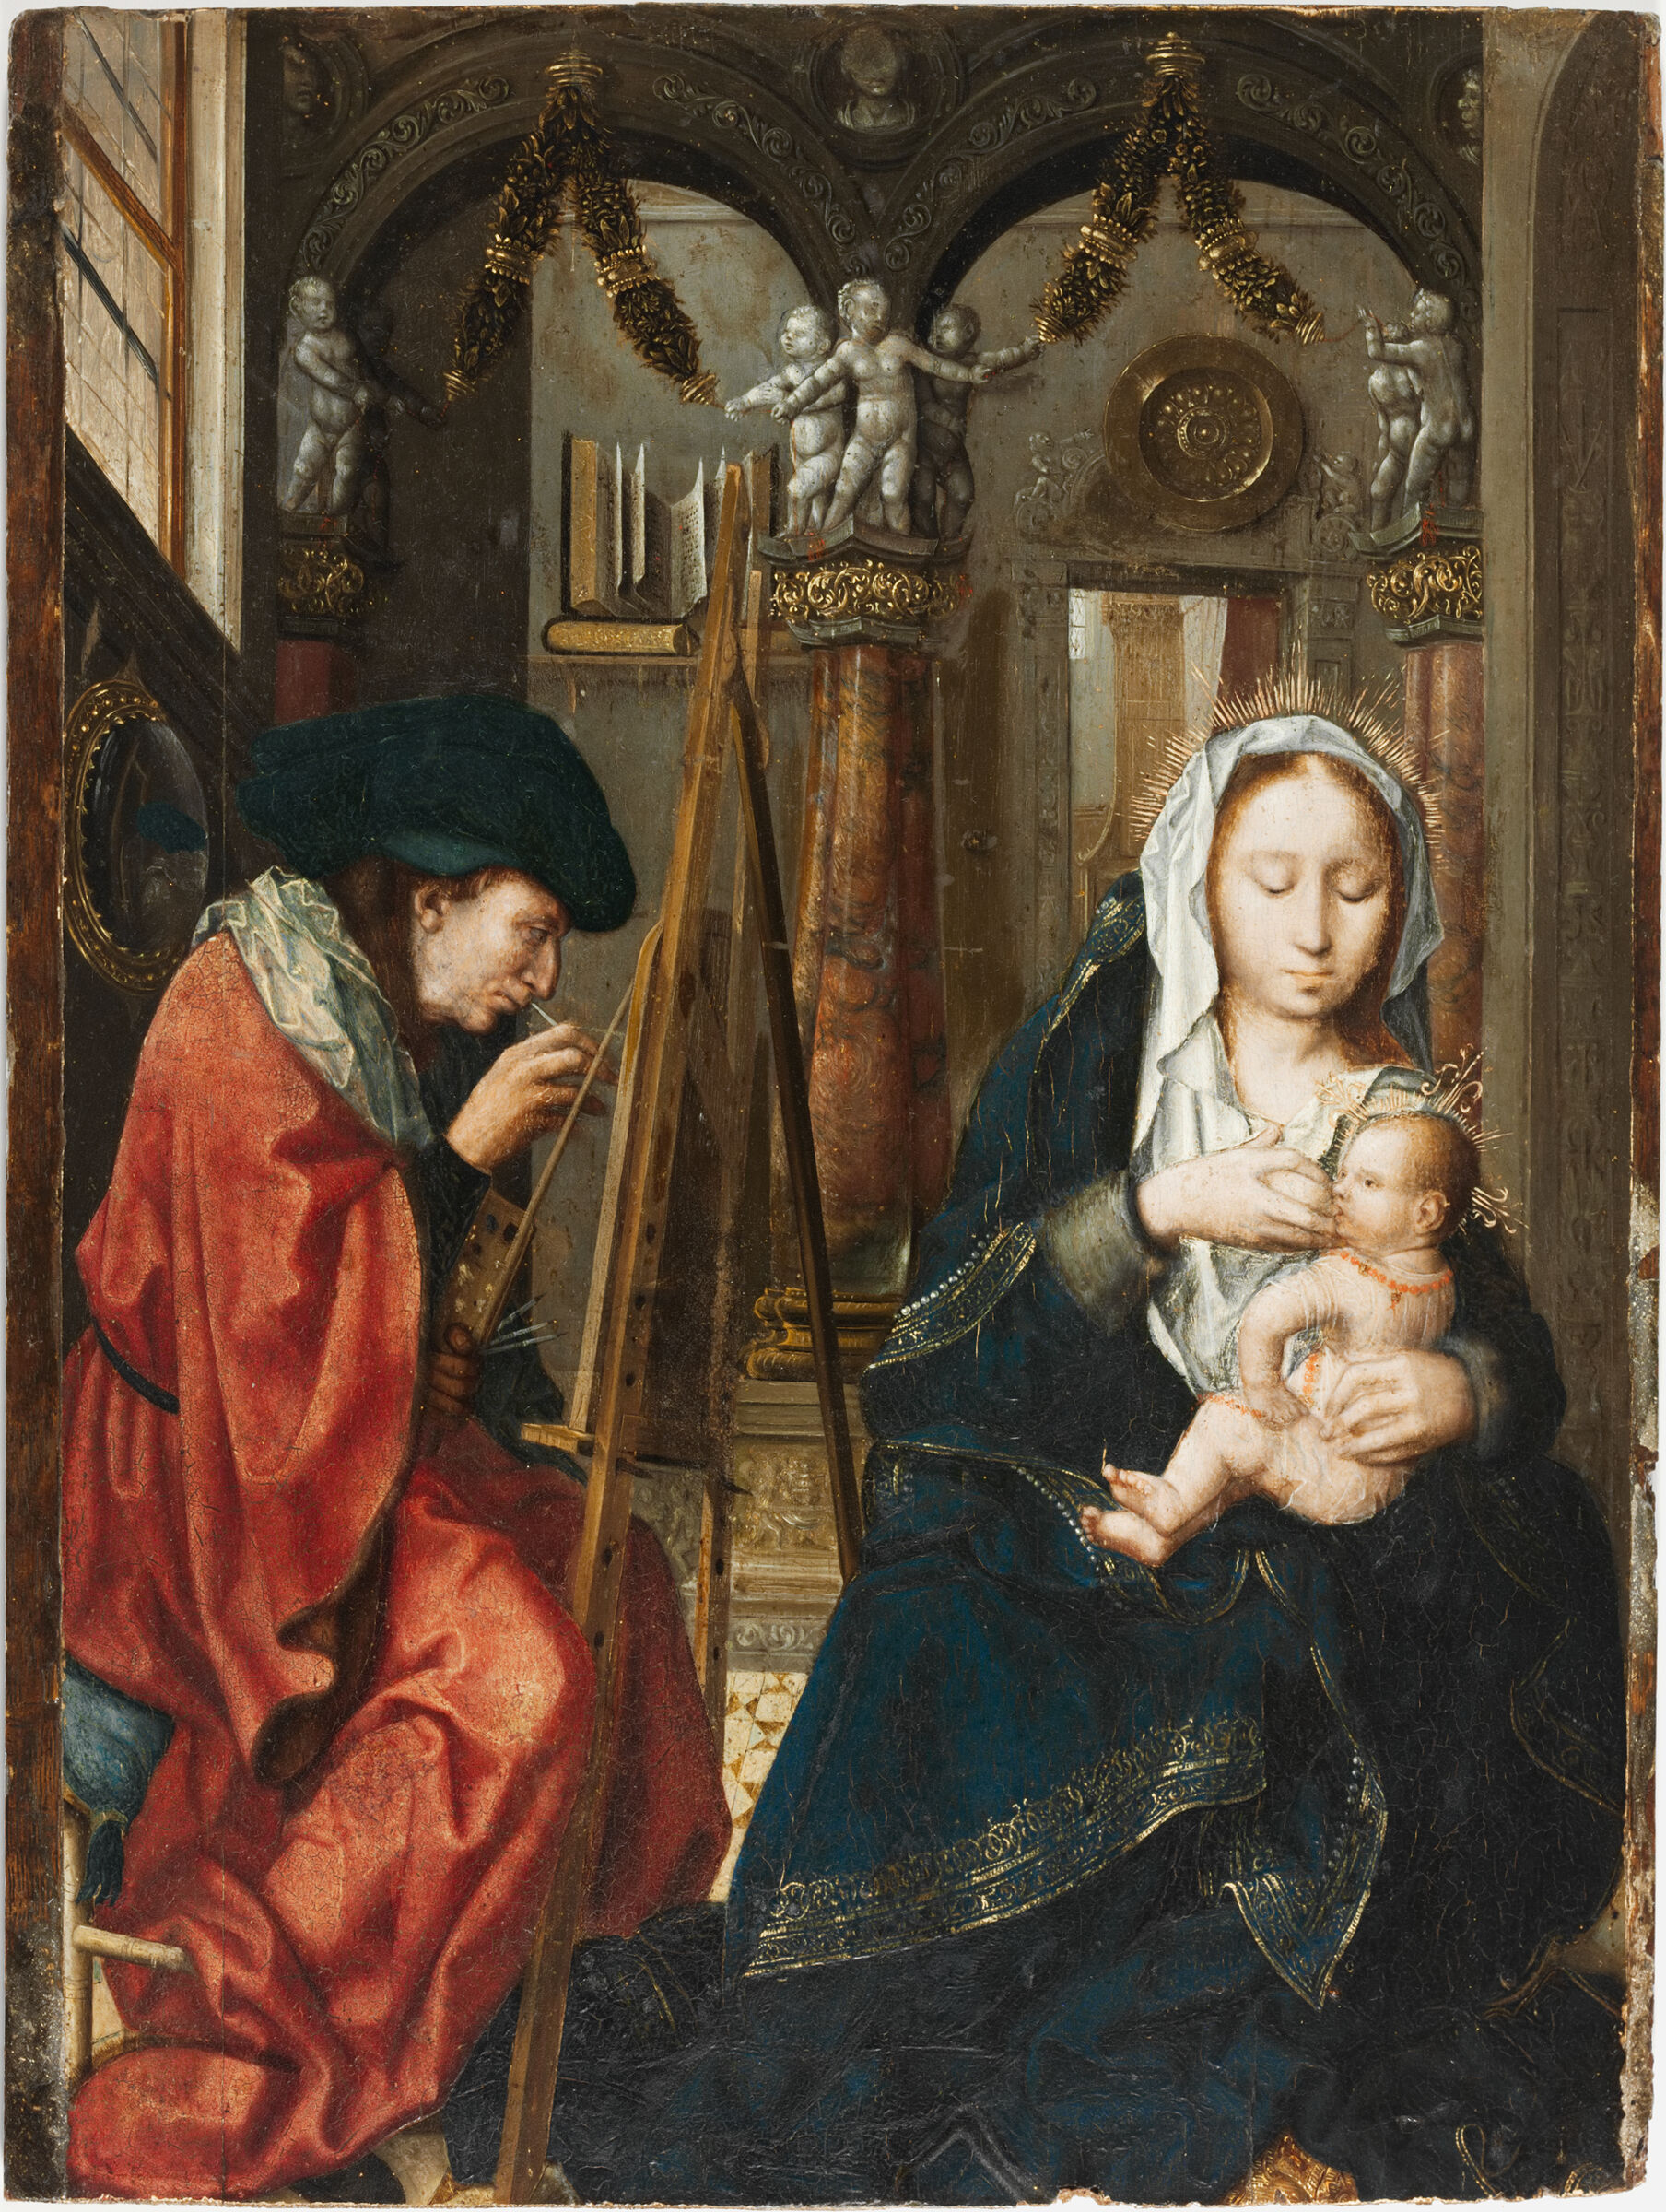 Saint Luke Painting The Virgin And Child